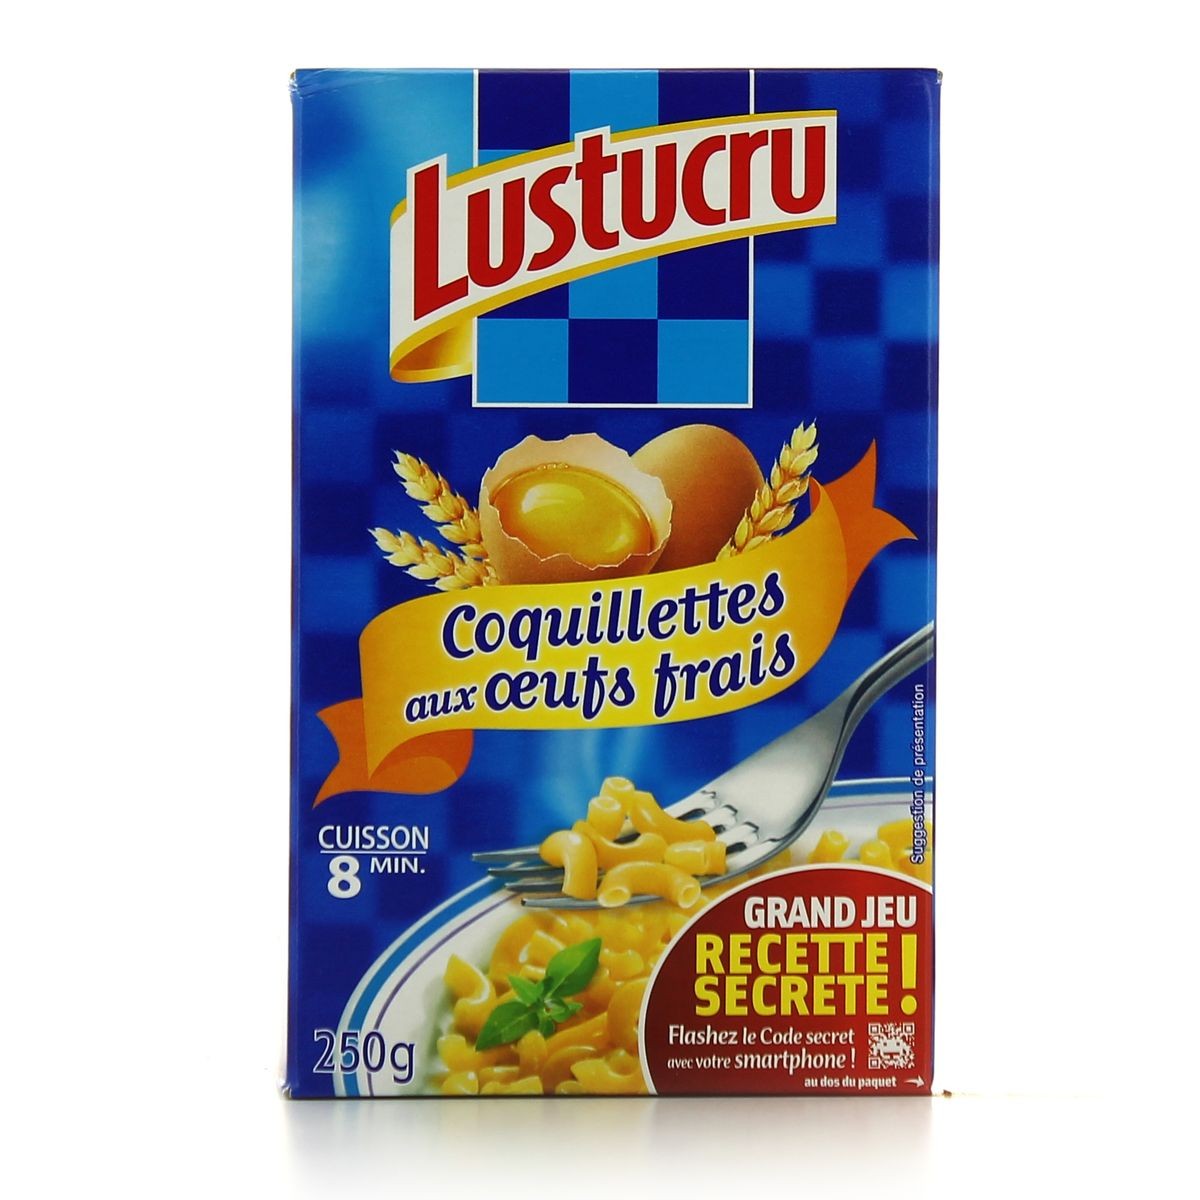 Coquillettes aux oeufs frais Lustucru 250g